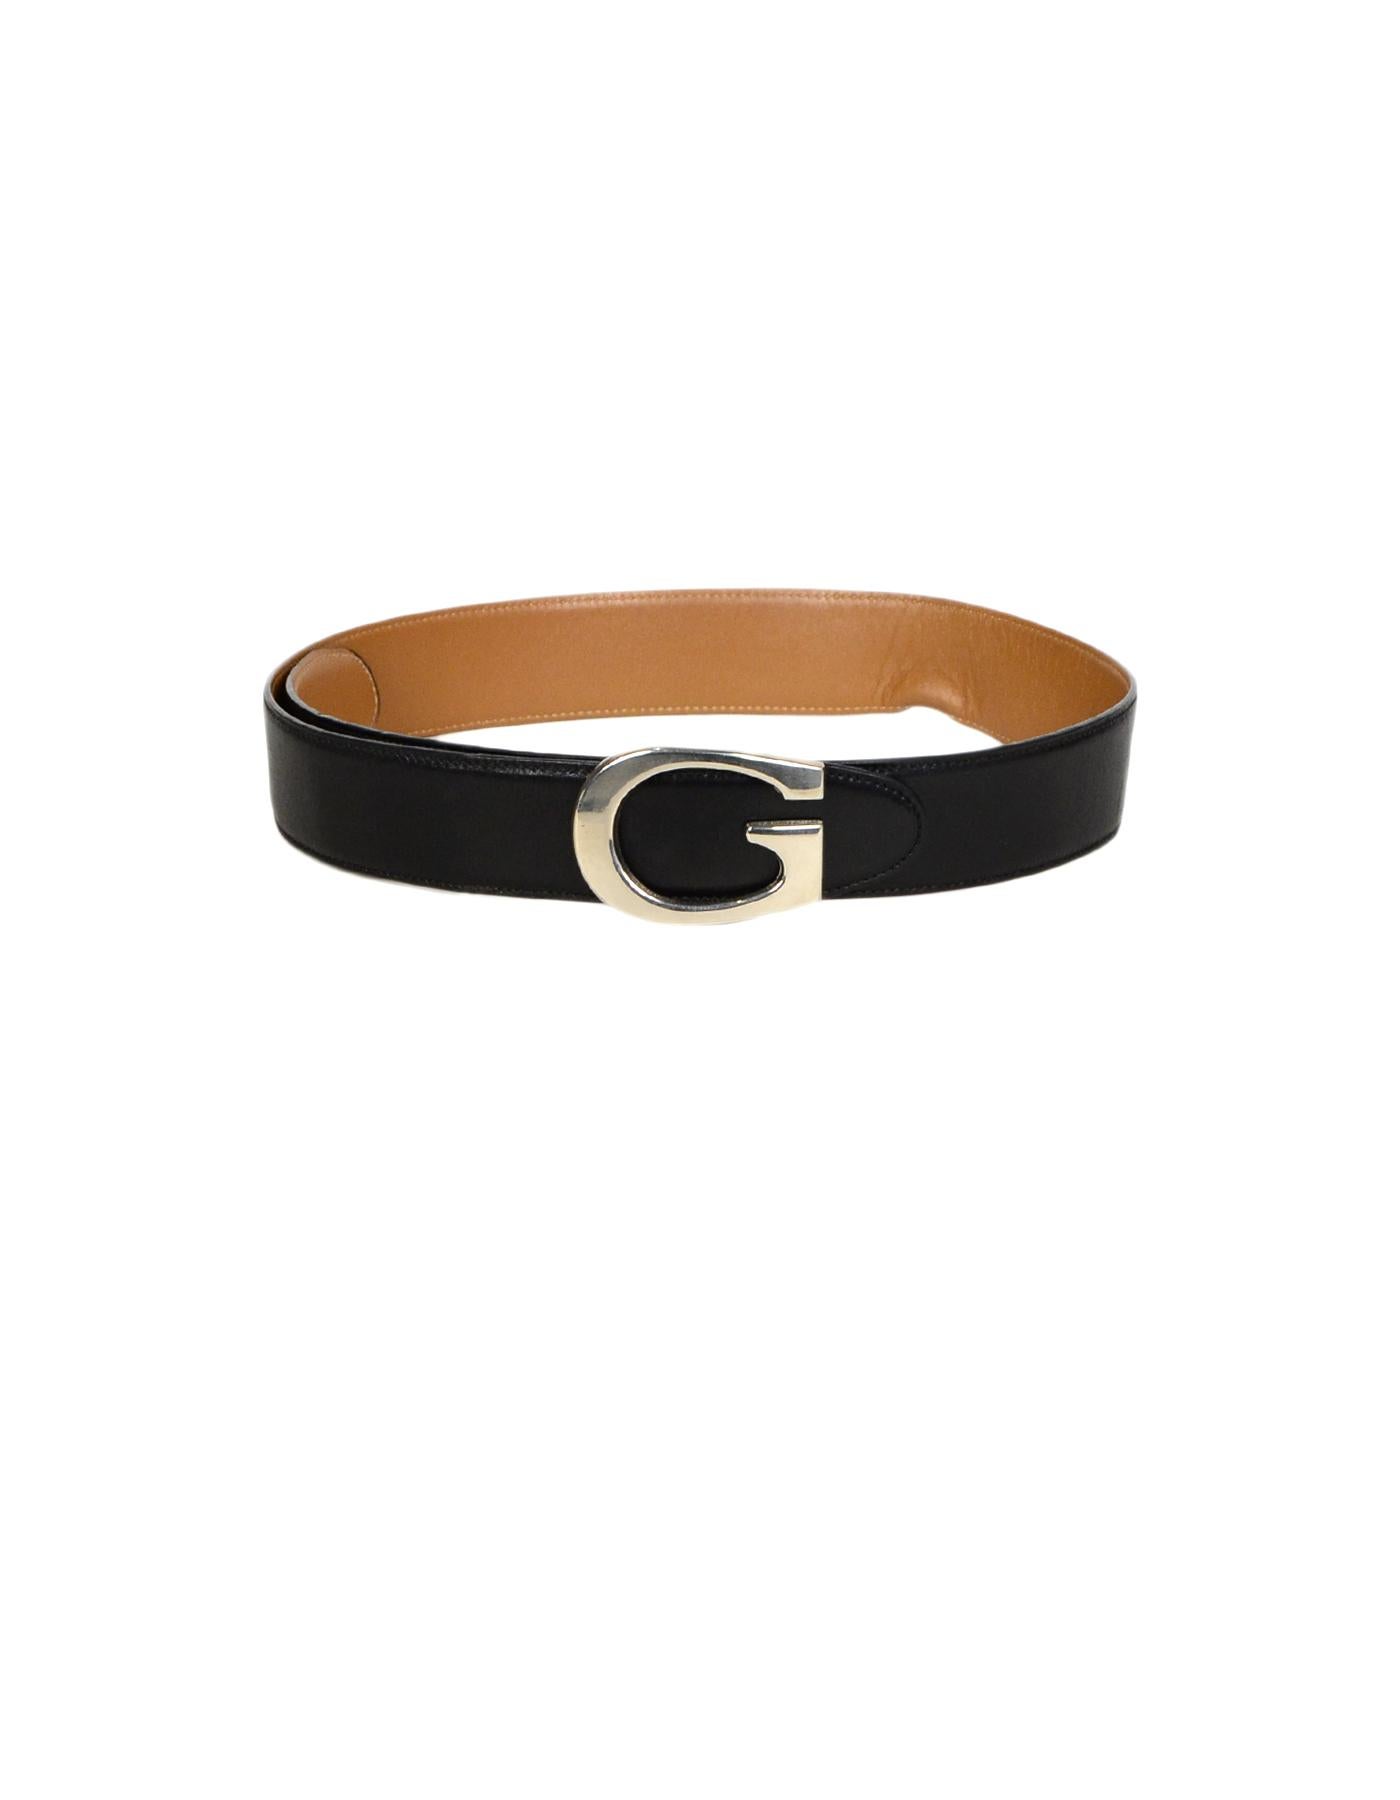 Brown Gucci Black/Tan Reversible Leather Belt W/ G Buckle Sz 65/26